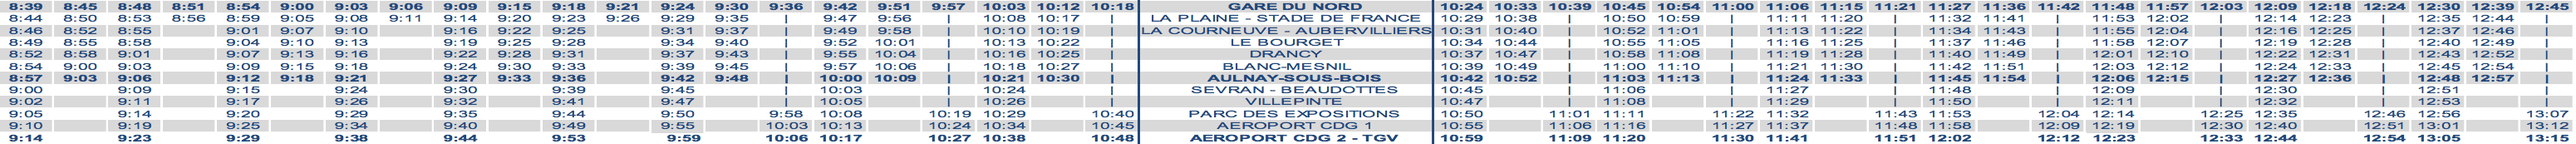 RER B Train Timetable Paris to CDG Midday Weekday 2020 strike